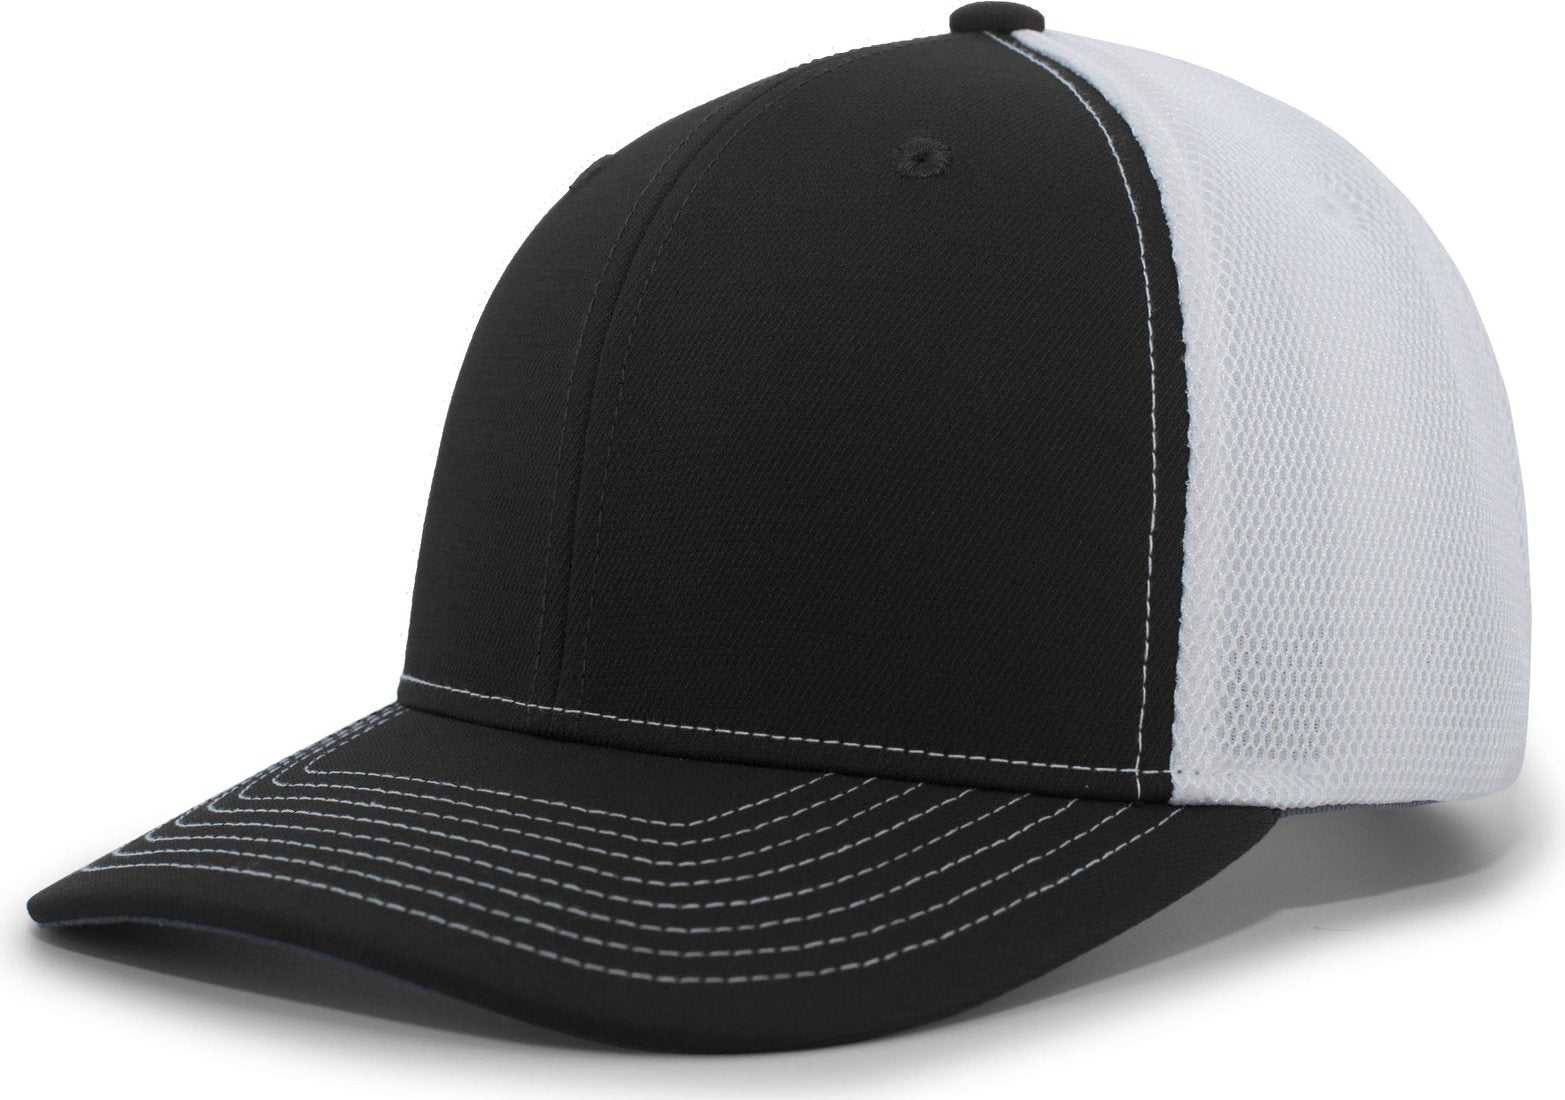 Pacific Headwear P365 Air Mesh Sideline Cap - Black White Black - HIT a Double